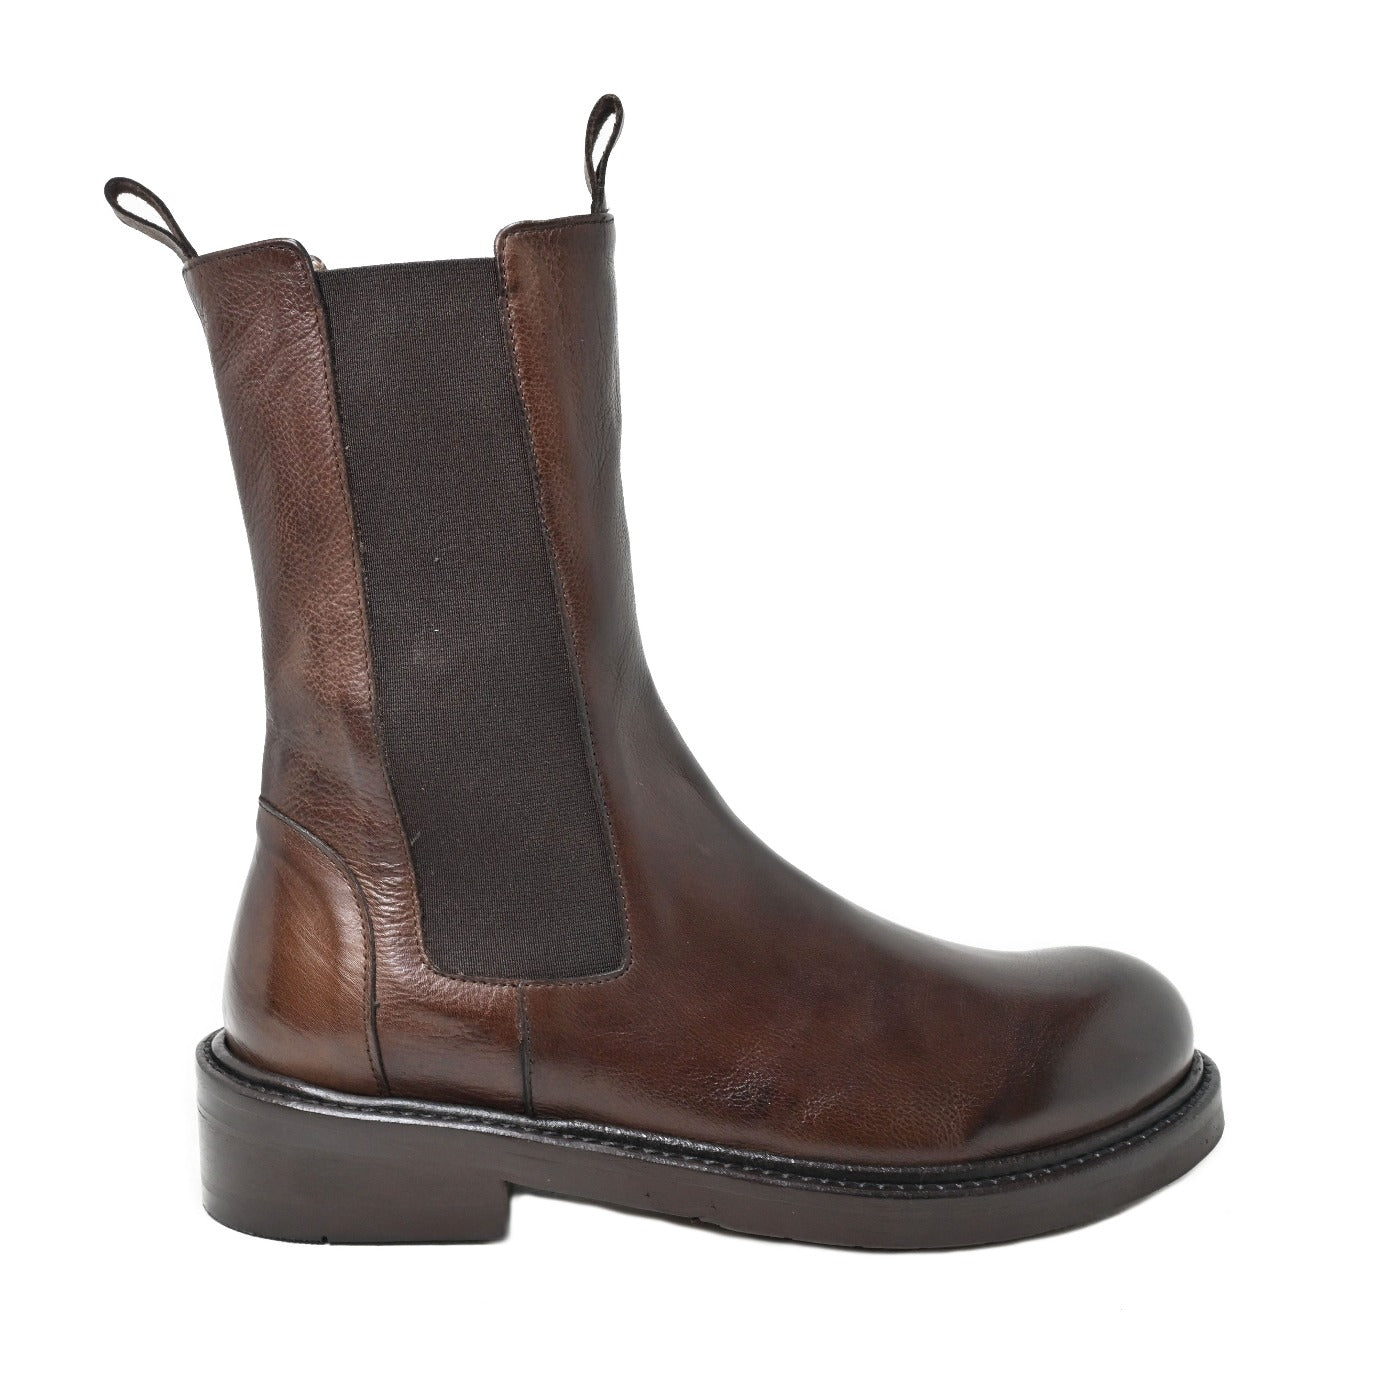 ALBA 21 - beatles ankle boot leather MOKA - History541